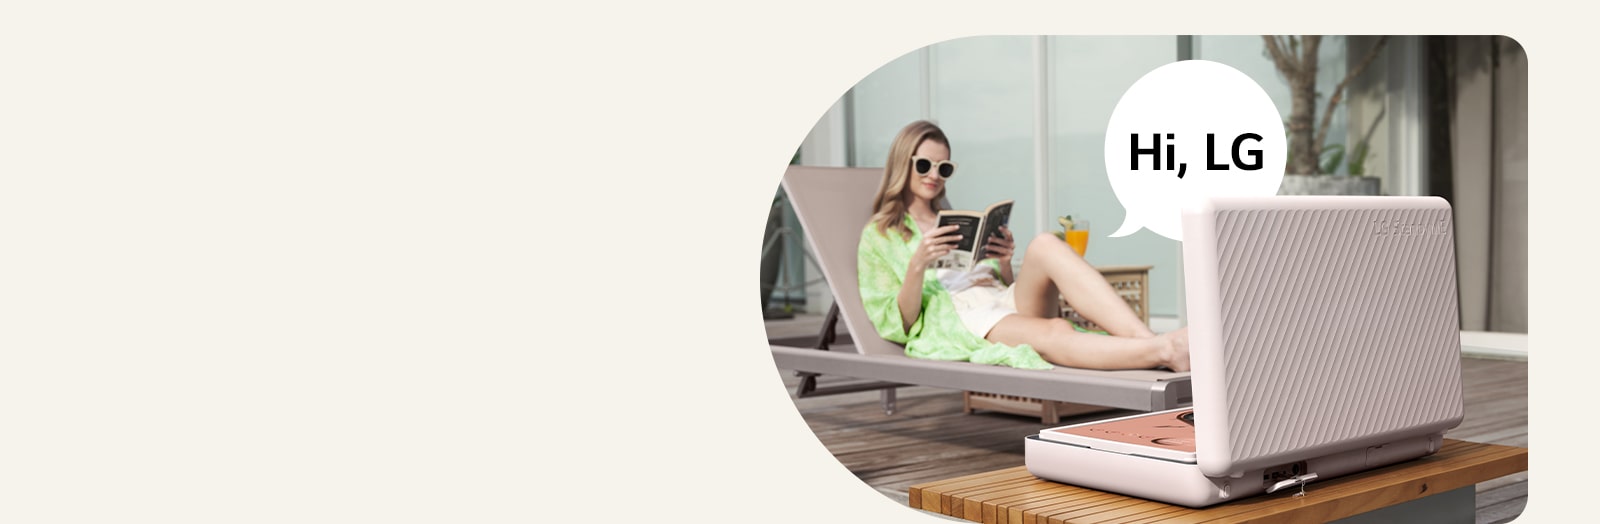 LG StanbyME閨蜜機 Go 後視圖，放在露臺桌正前方。女人在海灘椅上徹底放鬆，使用語音控制螢幕。為了闡述此場景，她的右側顯示帶有「嗨，LG」文字的說話氣泡。